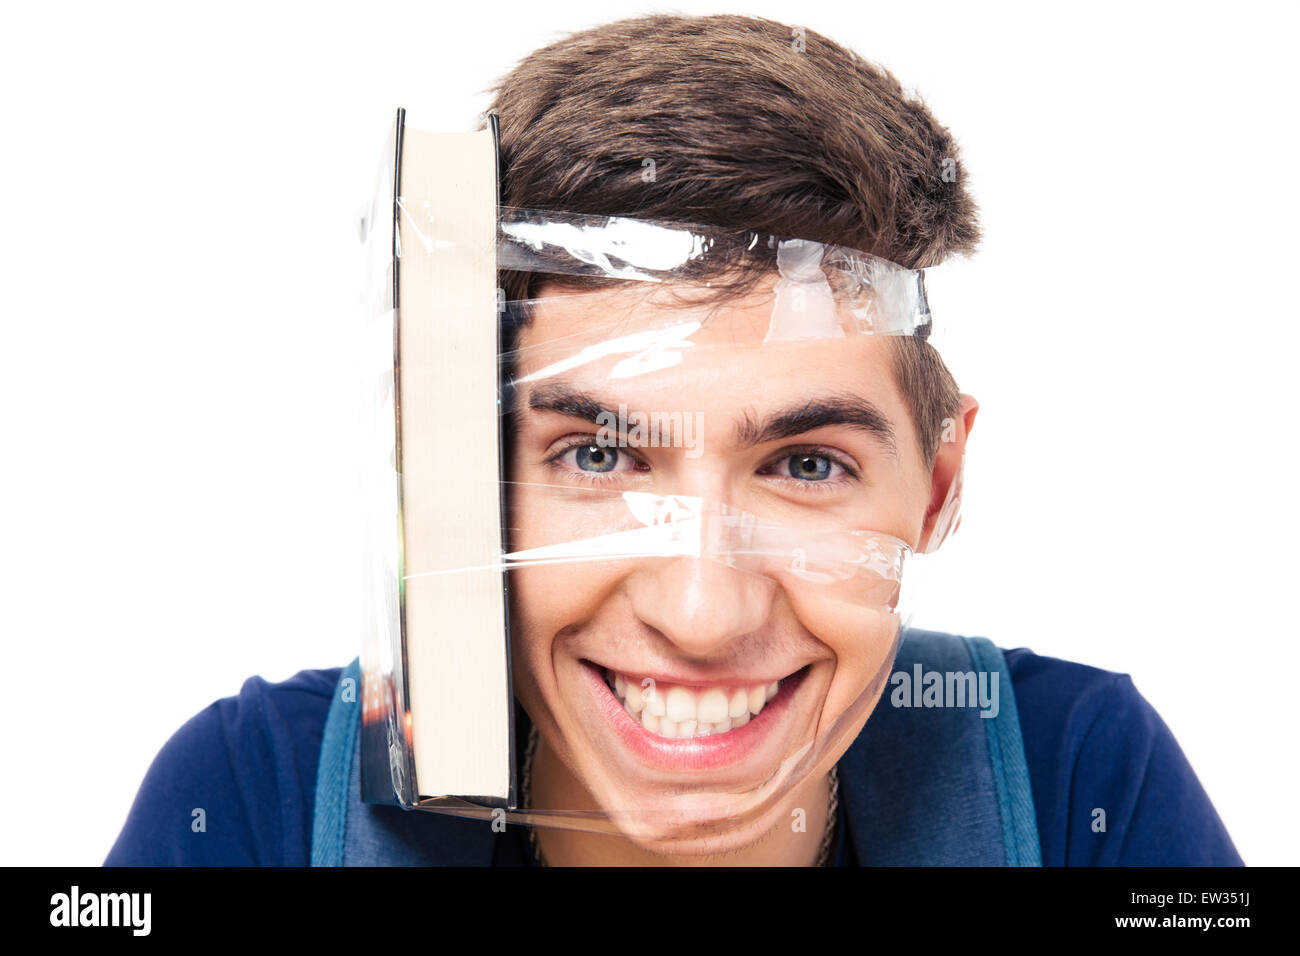 Male student with book attaché à sa tête isolé sur un fond blanc. Looking at camera Banque D'Images